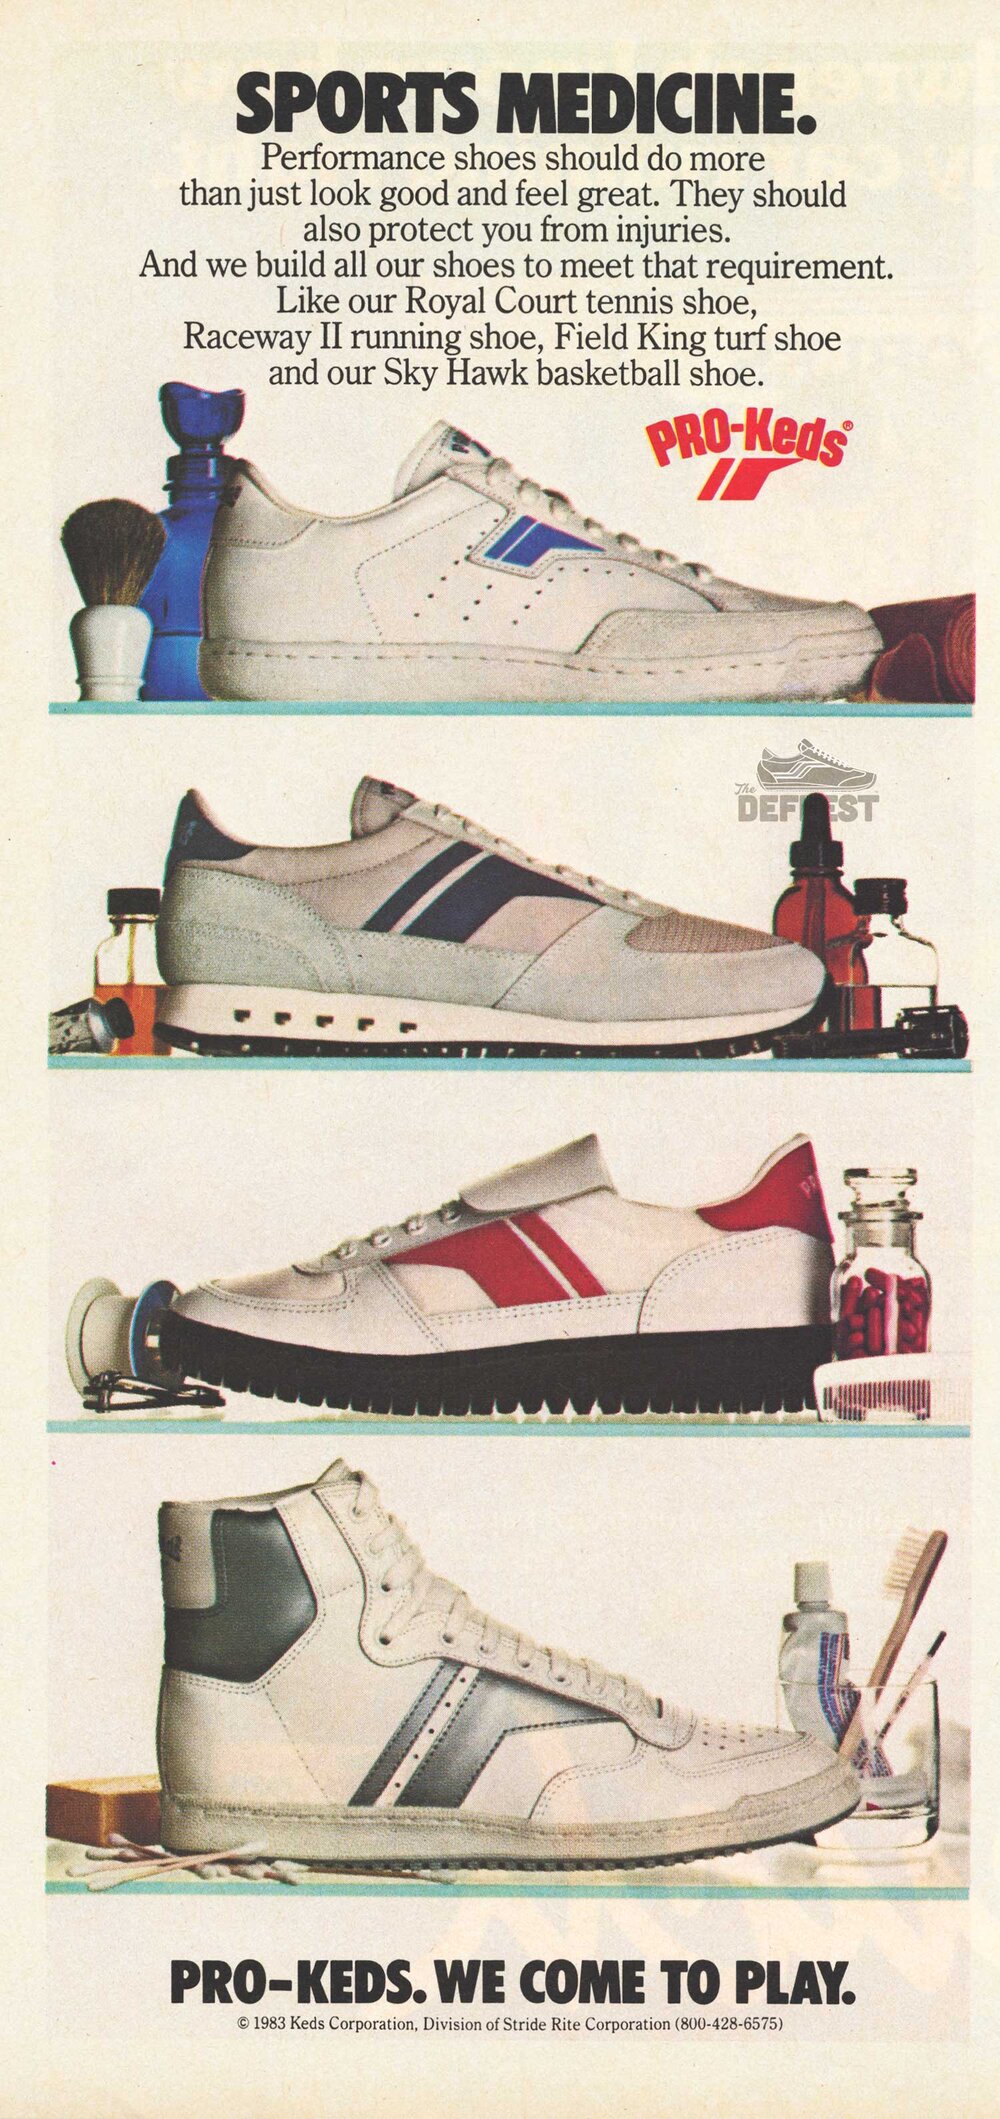 hebben zich vergist Stijgen balans The Deffest®. A vintage and retro sneaker blog. — Pro-Keds 1983 vintage  sneakers ad featuring the Royal Court, Raceway II, Field King and Sky Hawk